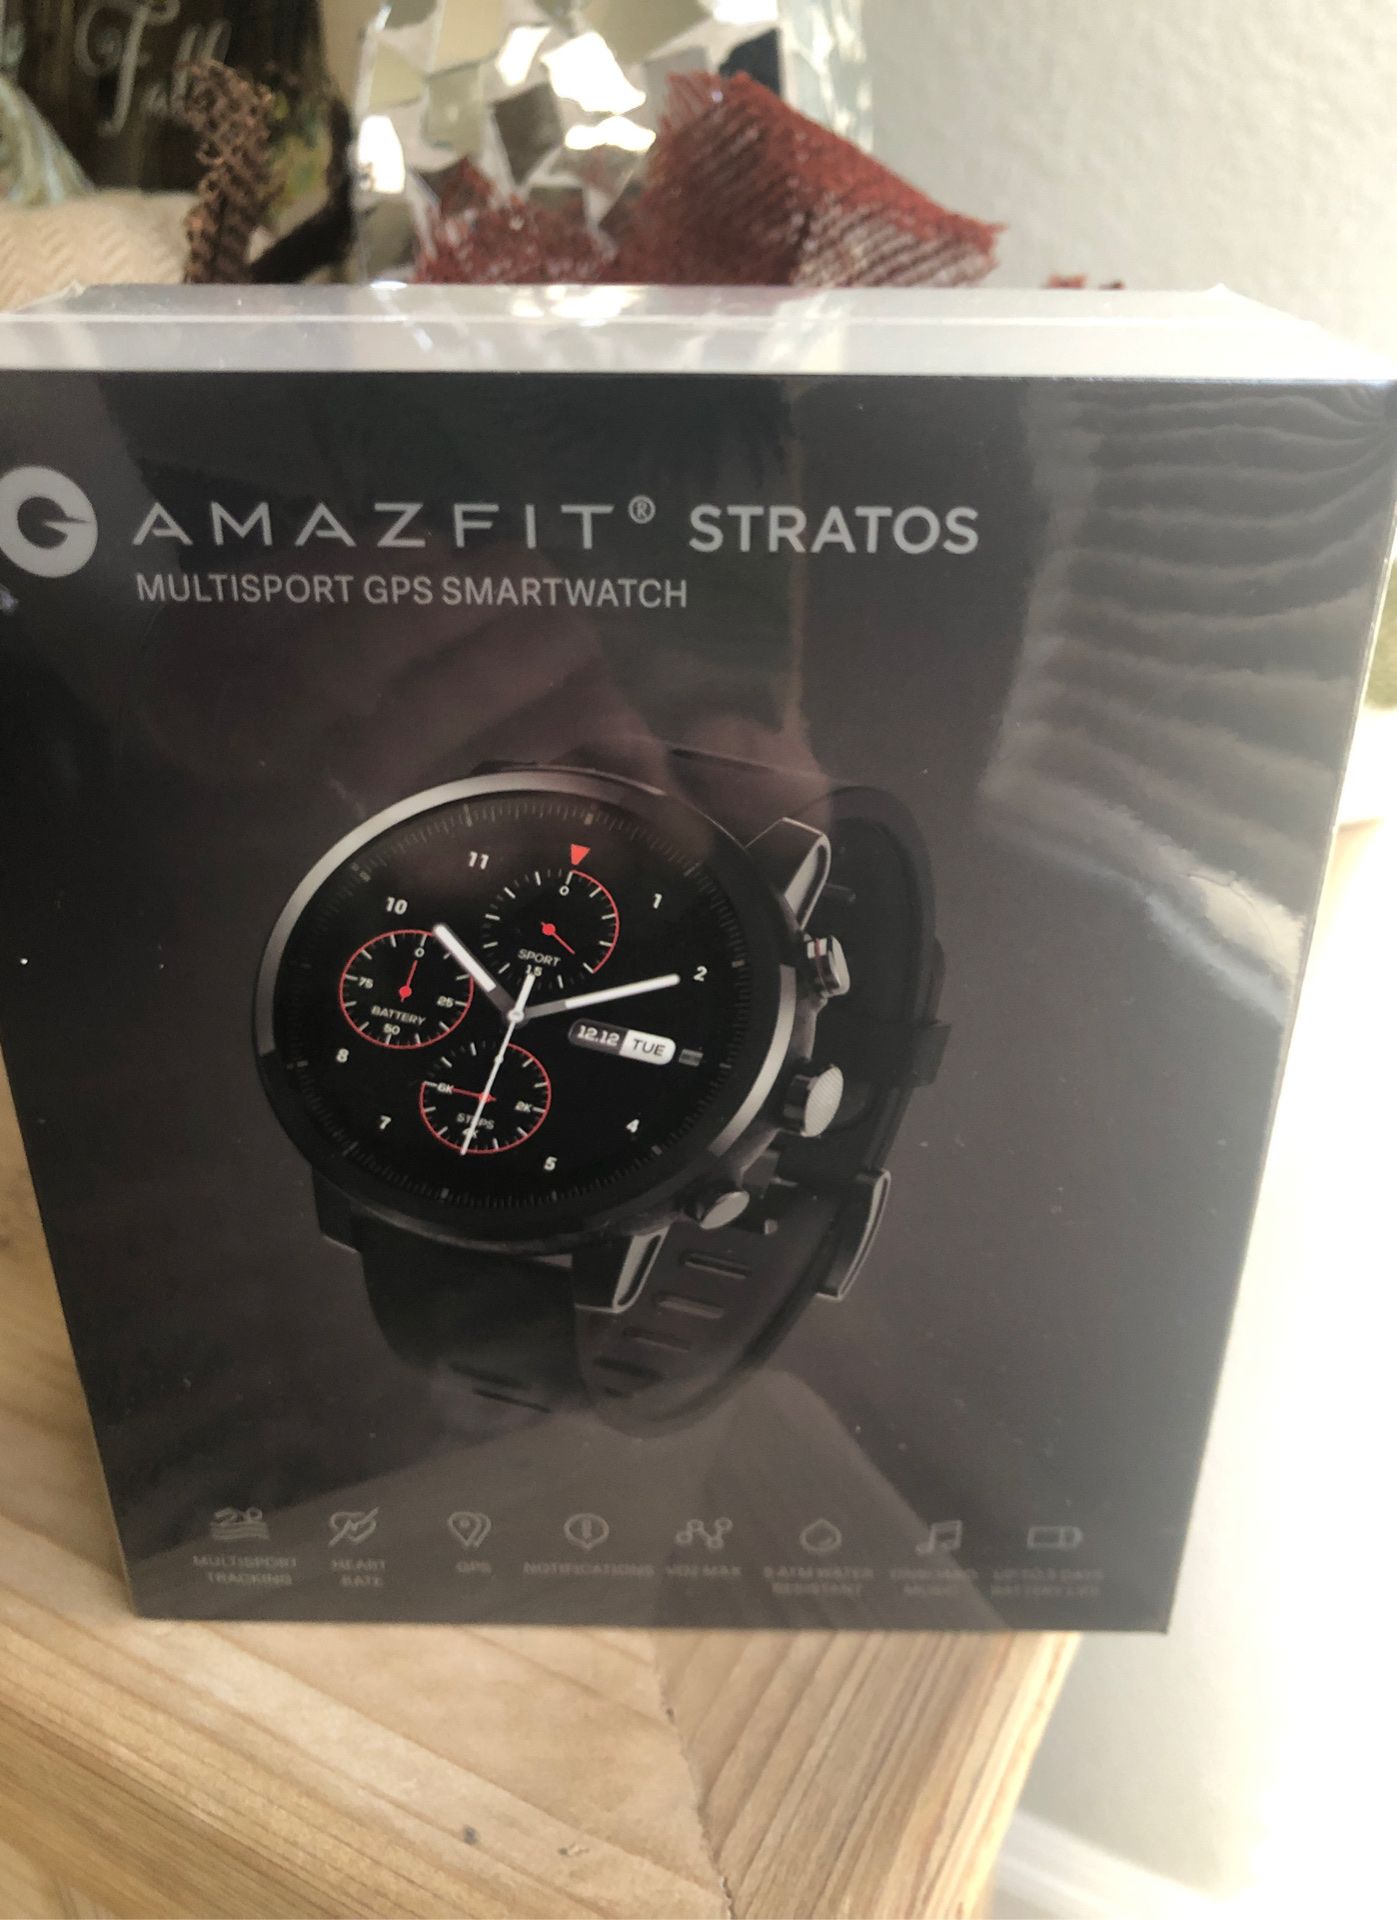 Amazefit Stratos MultiSport GPS Smartwatch